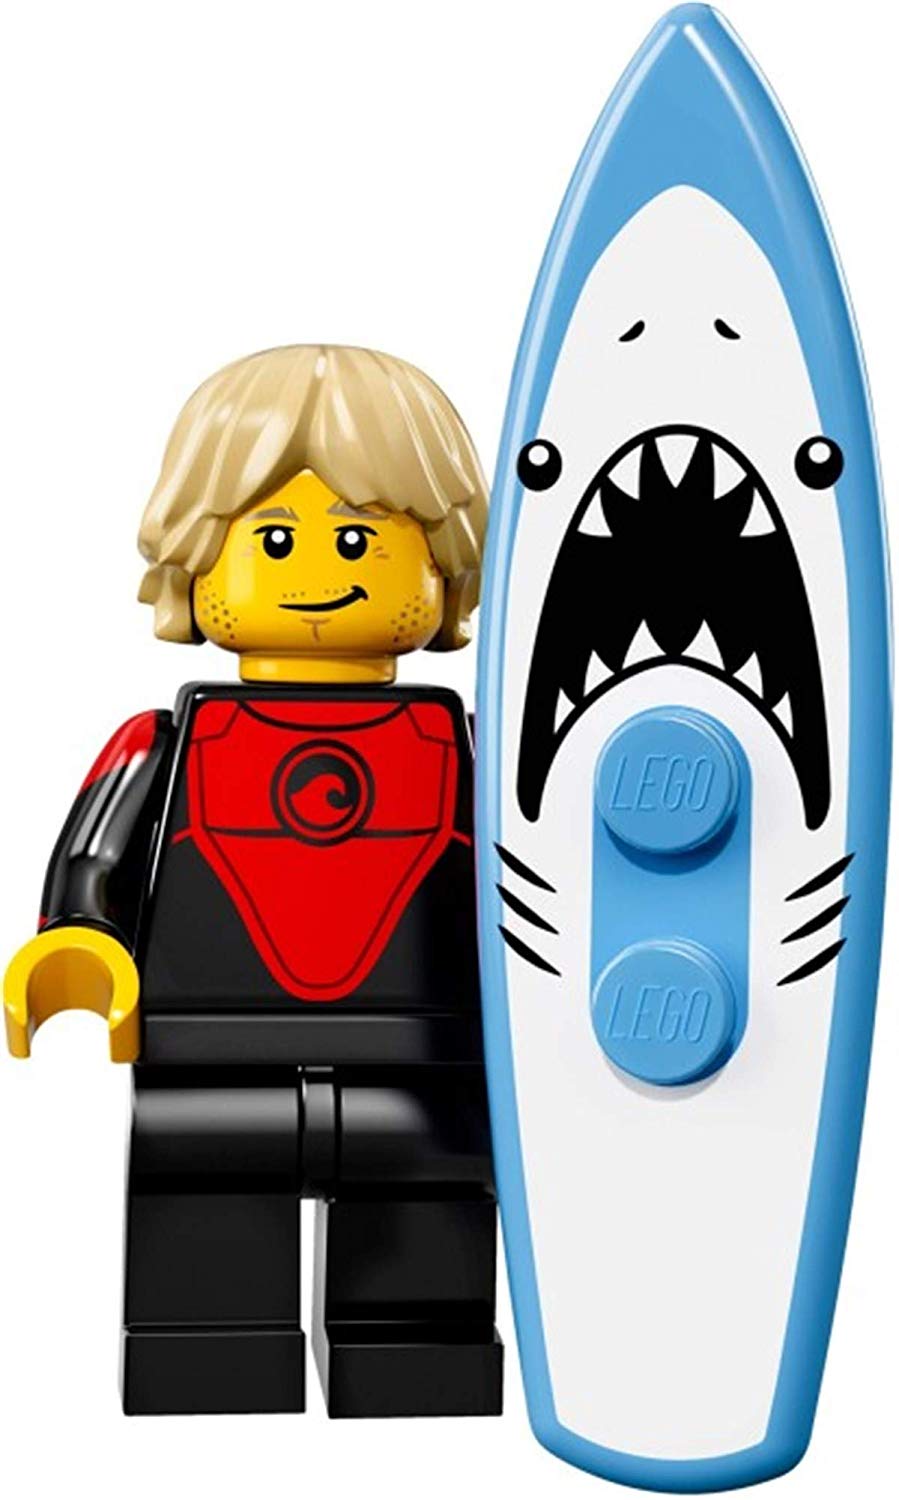 LEGO Minif igures Series 17 # 1 Professional Surfer Minif igure – (Bagged) 